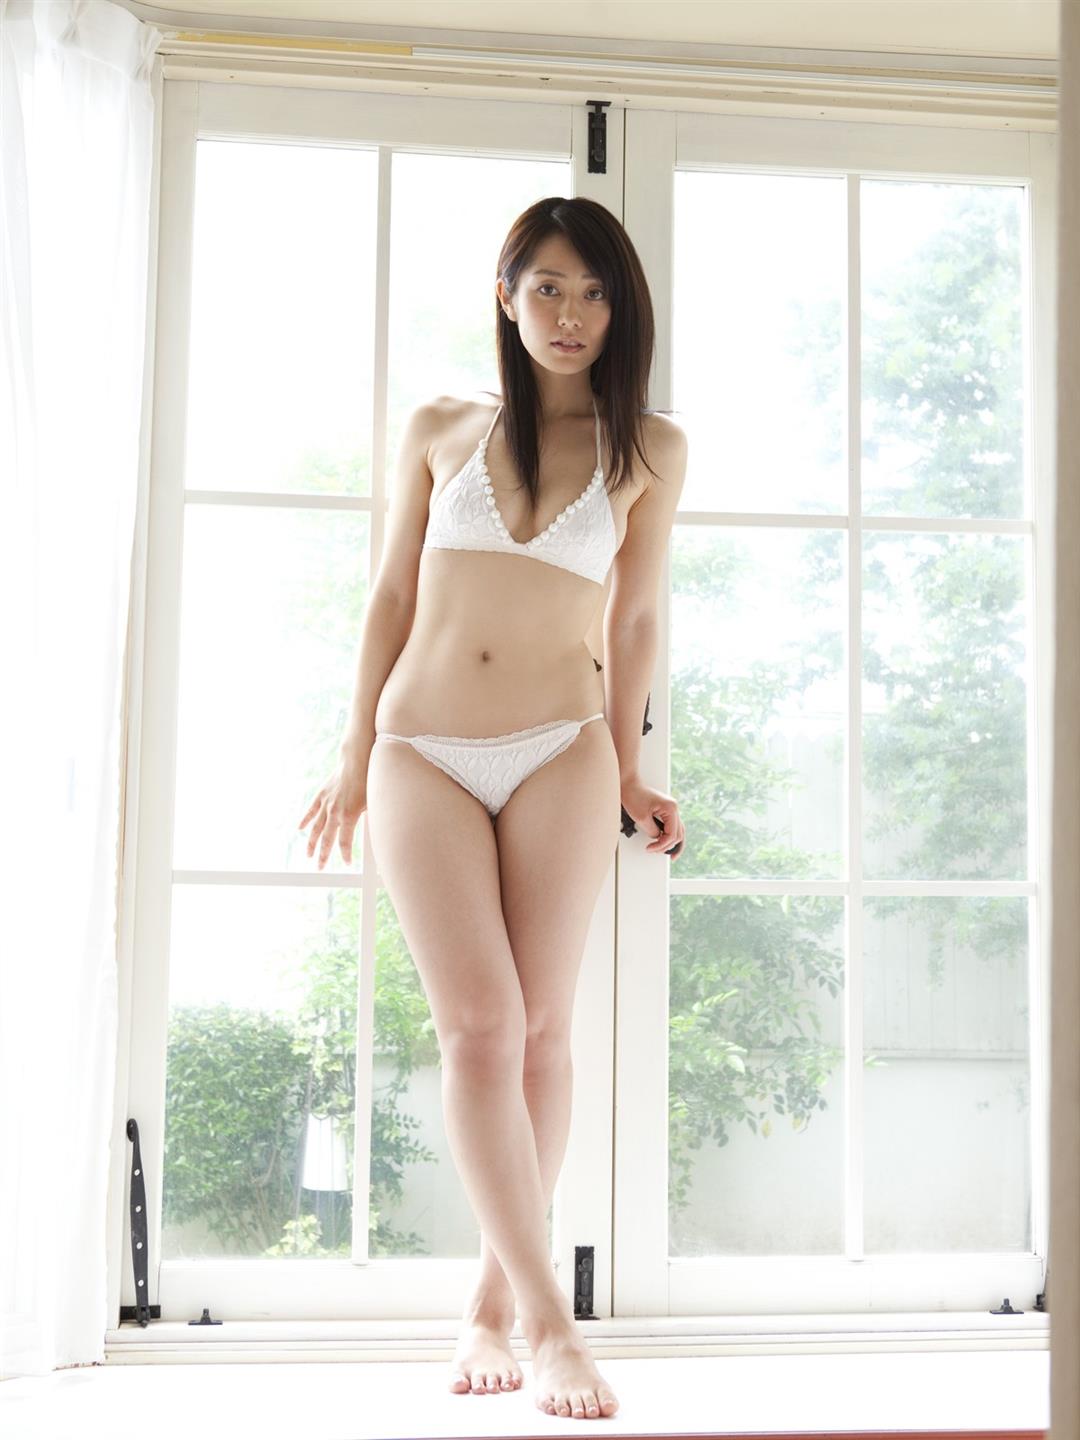 Sabra.net 谷桃子『桃子日和』 NEW COVER GIRL 唯美日本美女套图 - 62.jpg